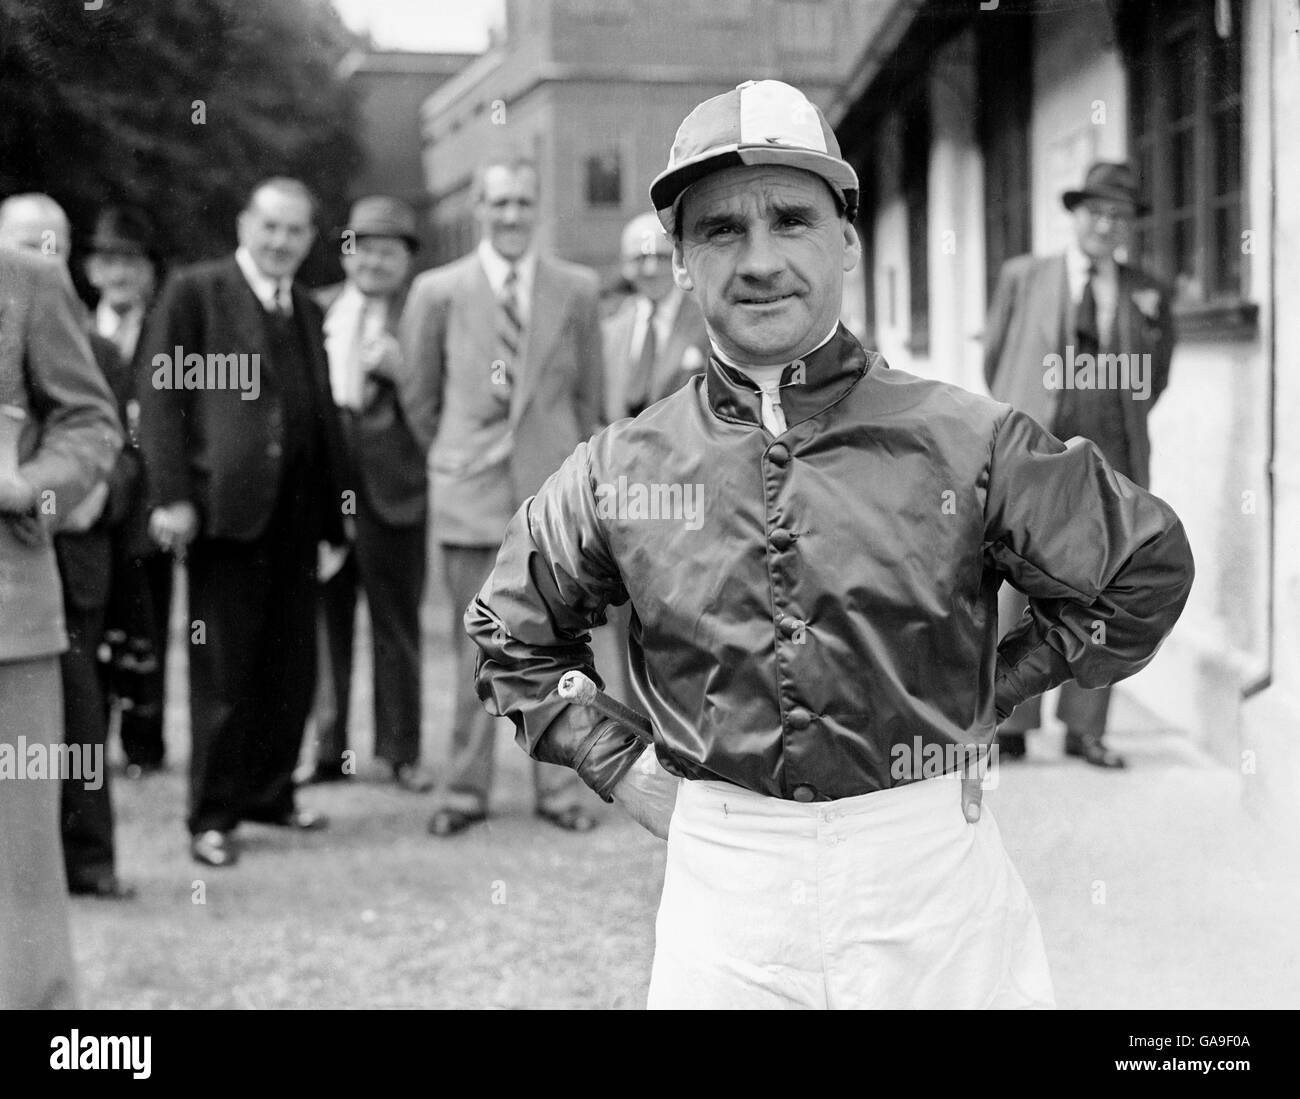 Gordon Richards, an English jockey, who is often considered the world's greatest jockey. Stock Photo